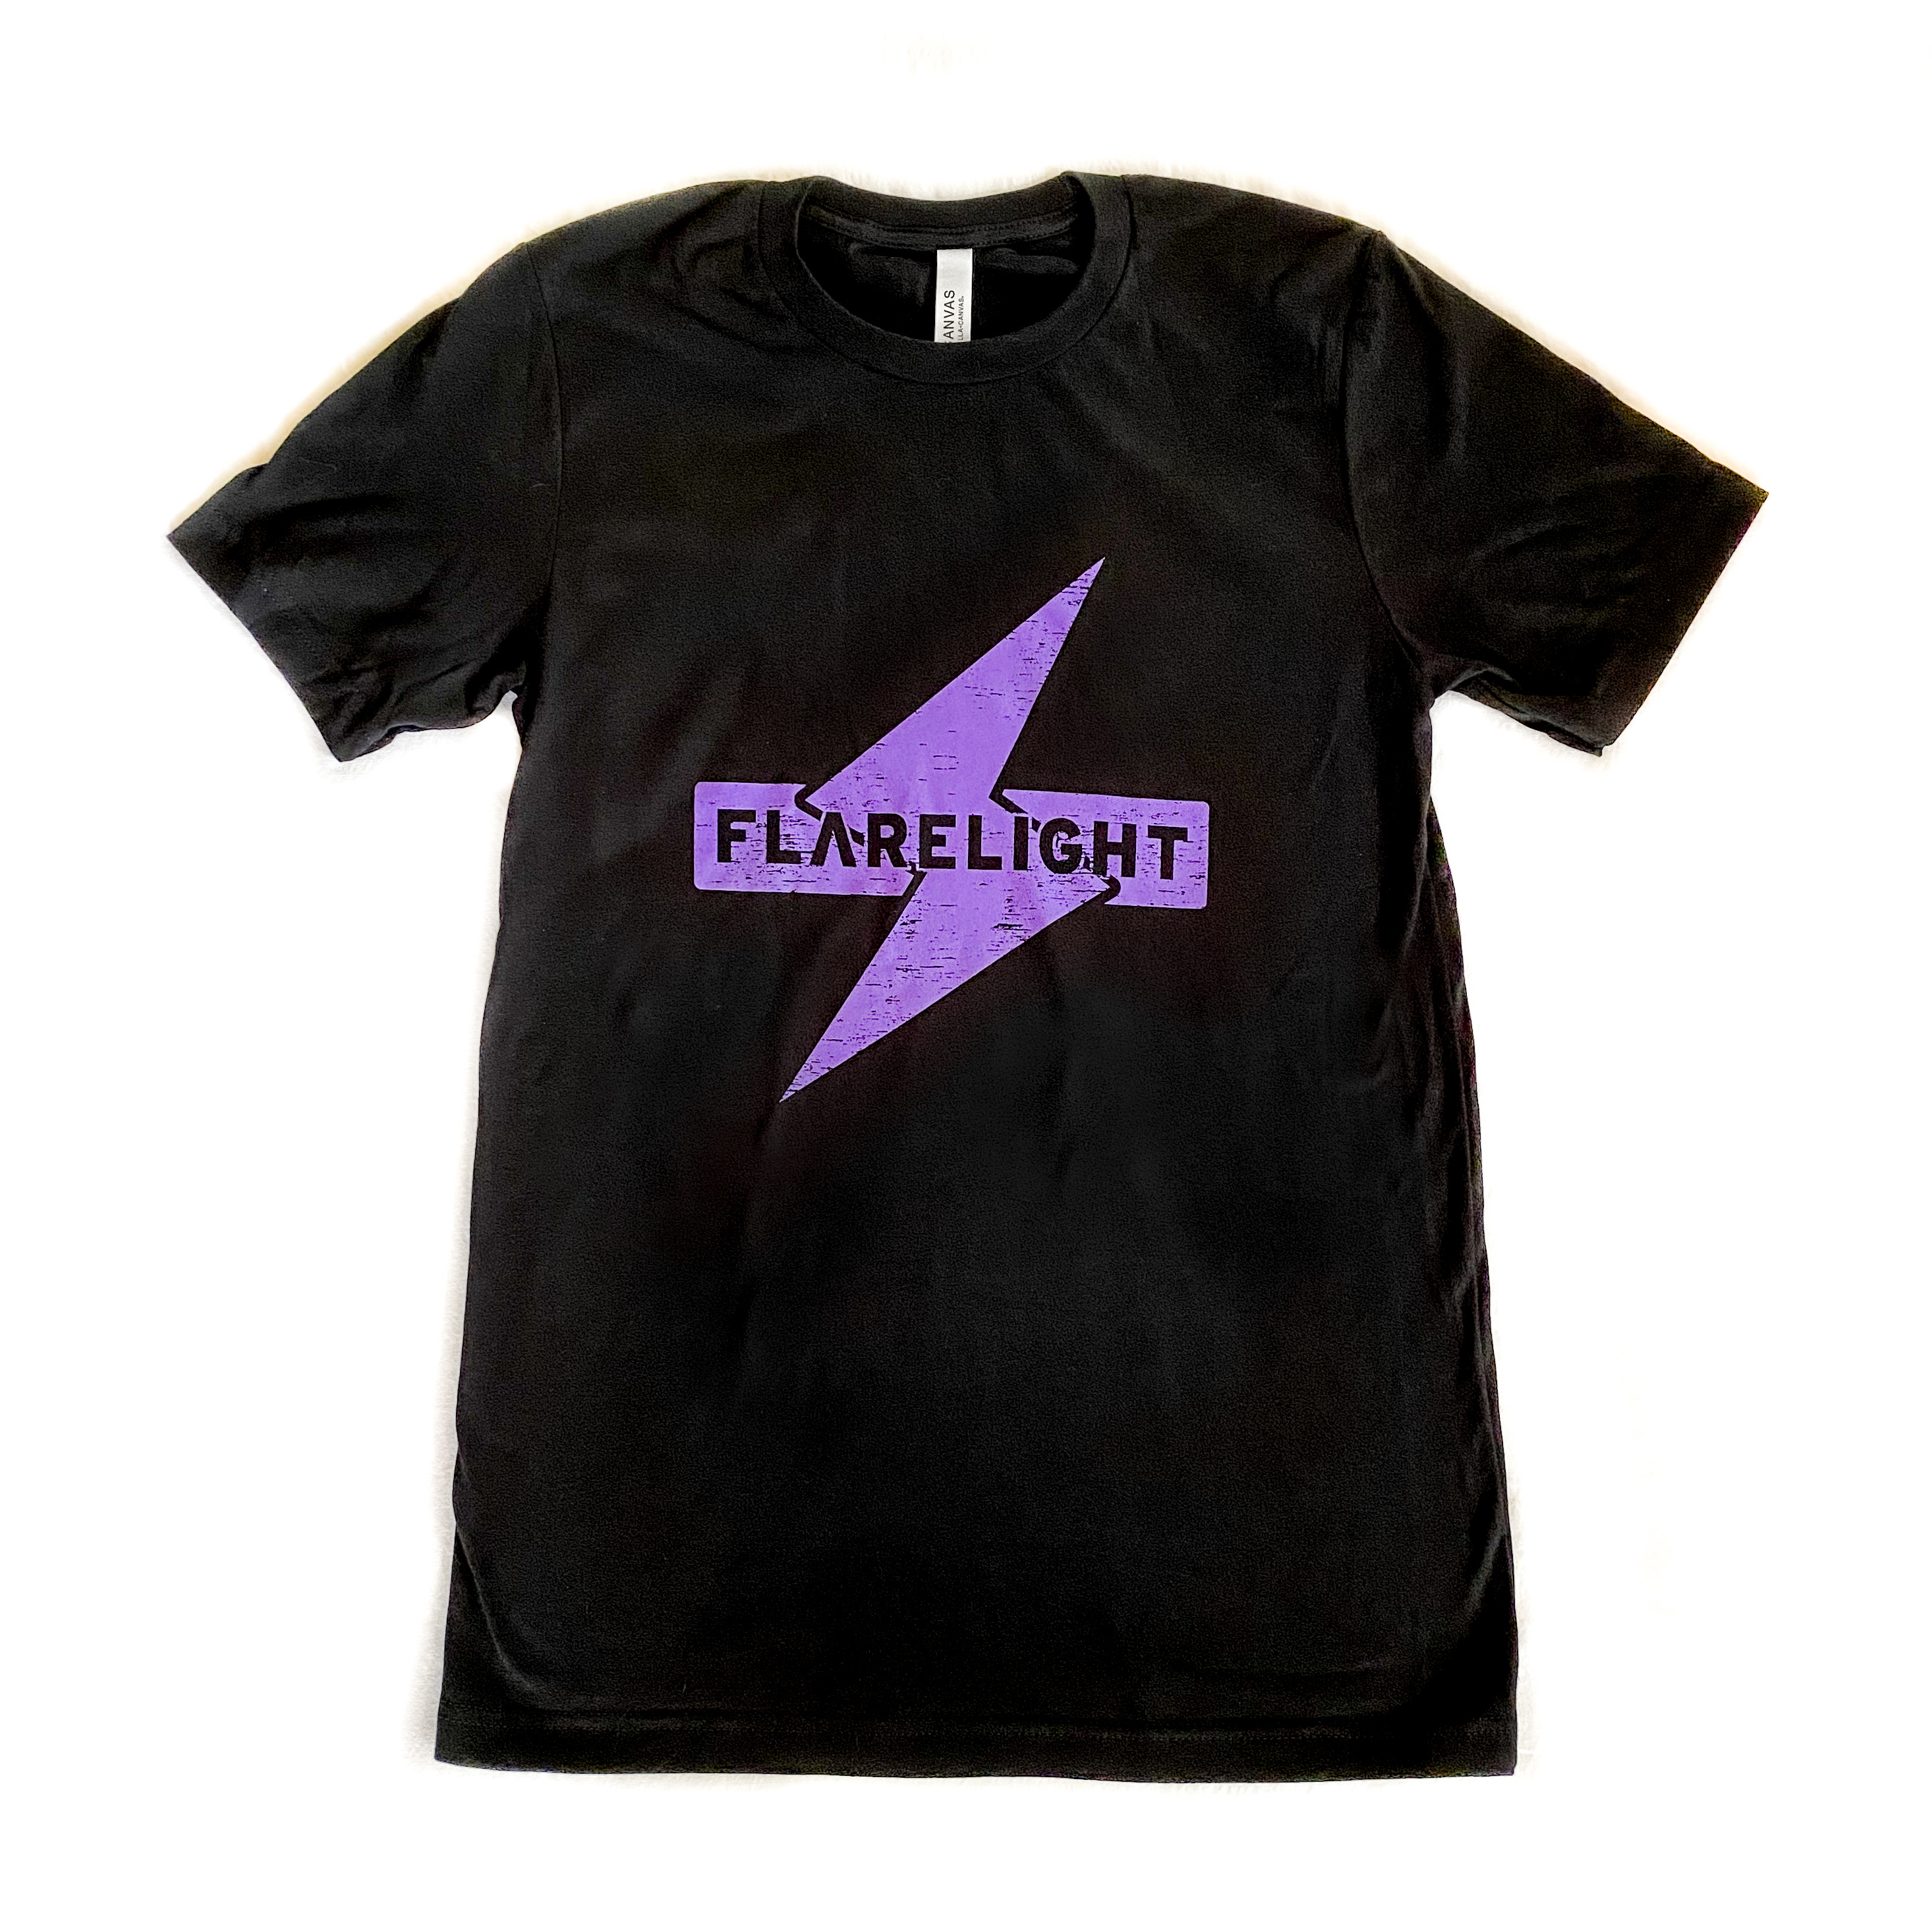 Flarelight logo shirt in black